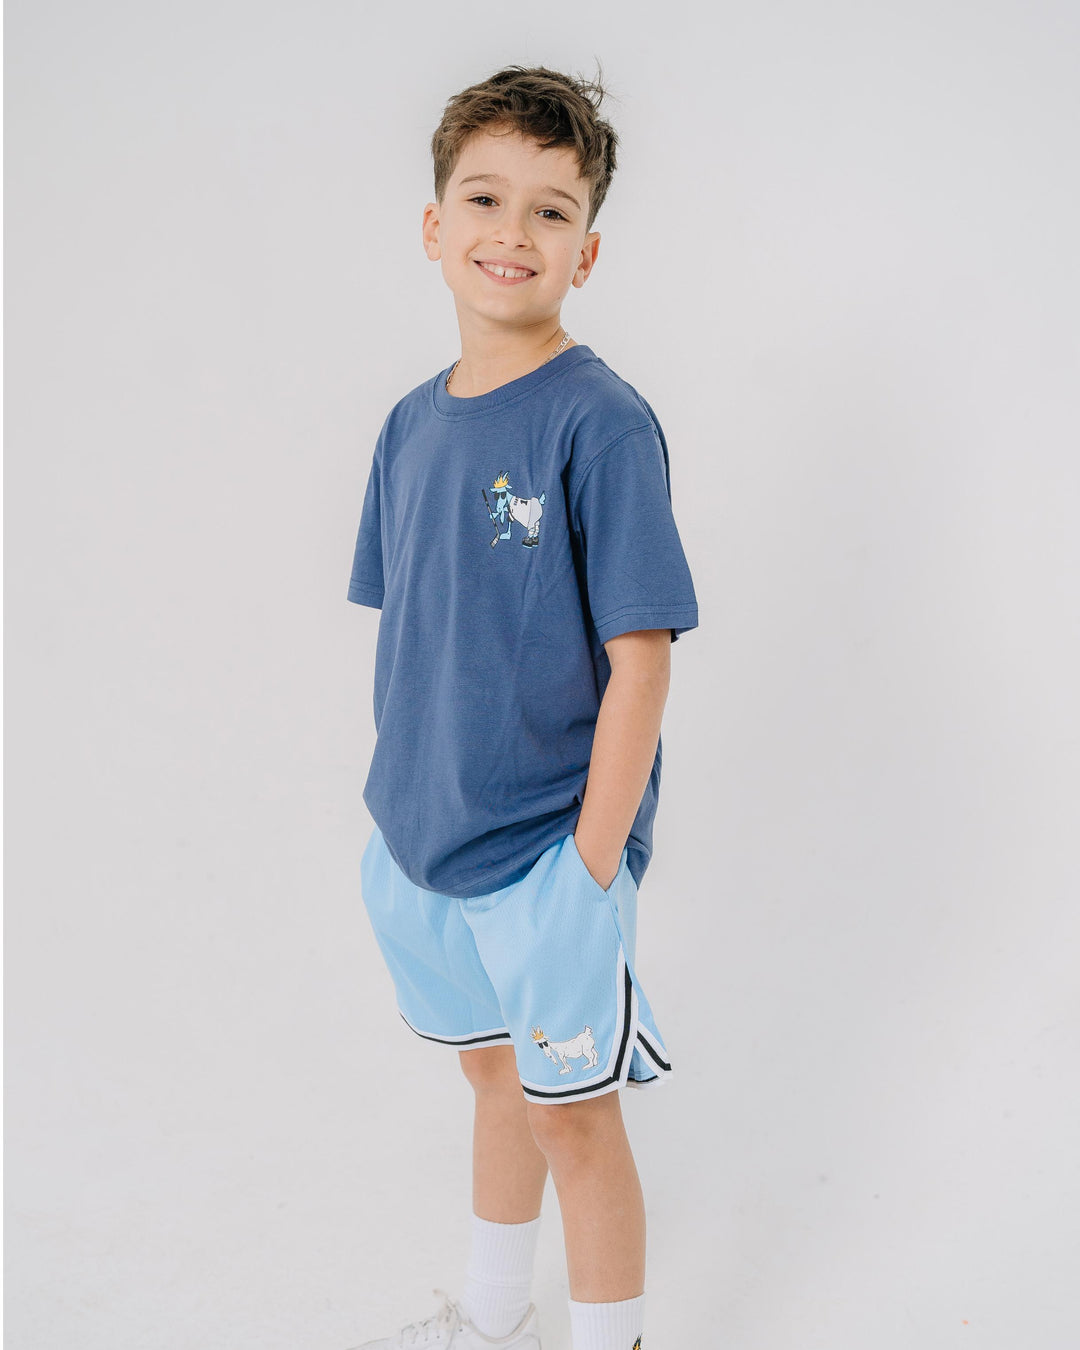 Kid wearing carolina blue mesh shorts with black and white waistband#color_carolina-blue